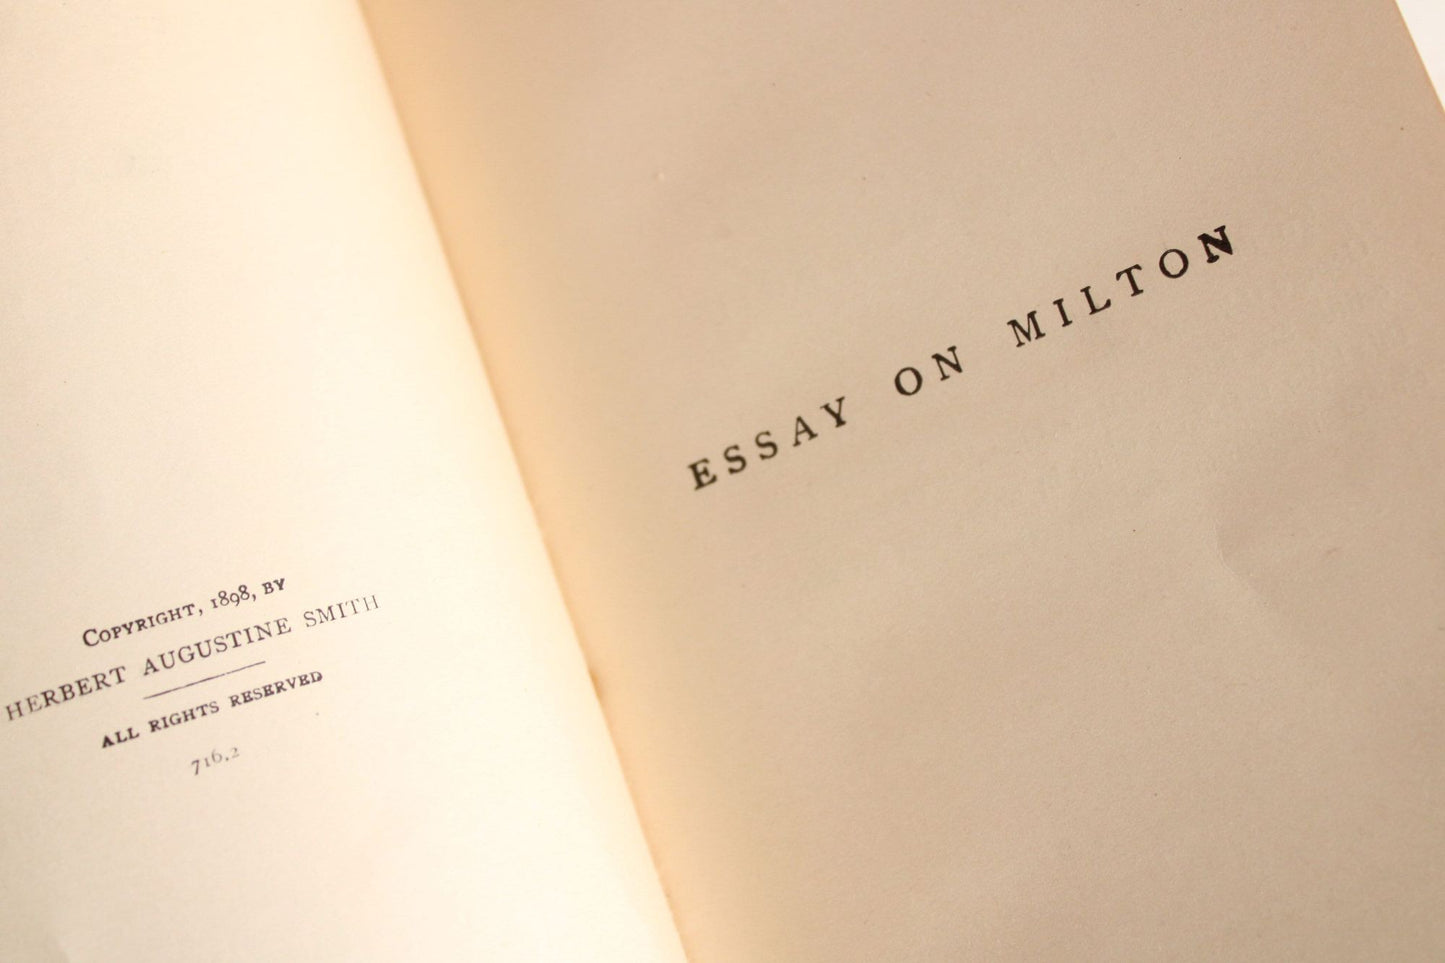 Vintage Antique 1890s Book, "Macaulay's Essay On Milton" Herbert Augustine Smith